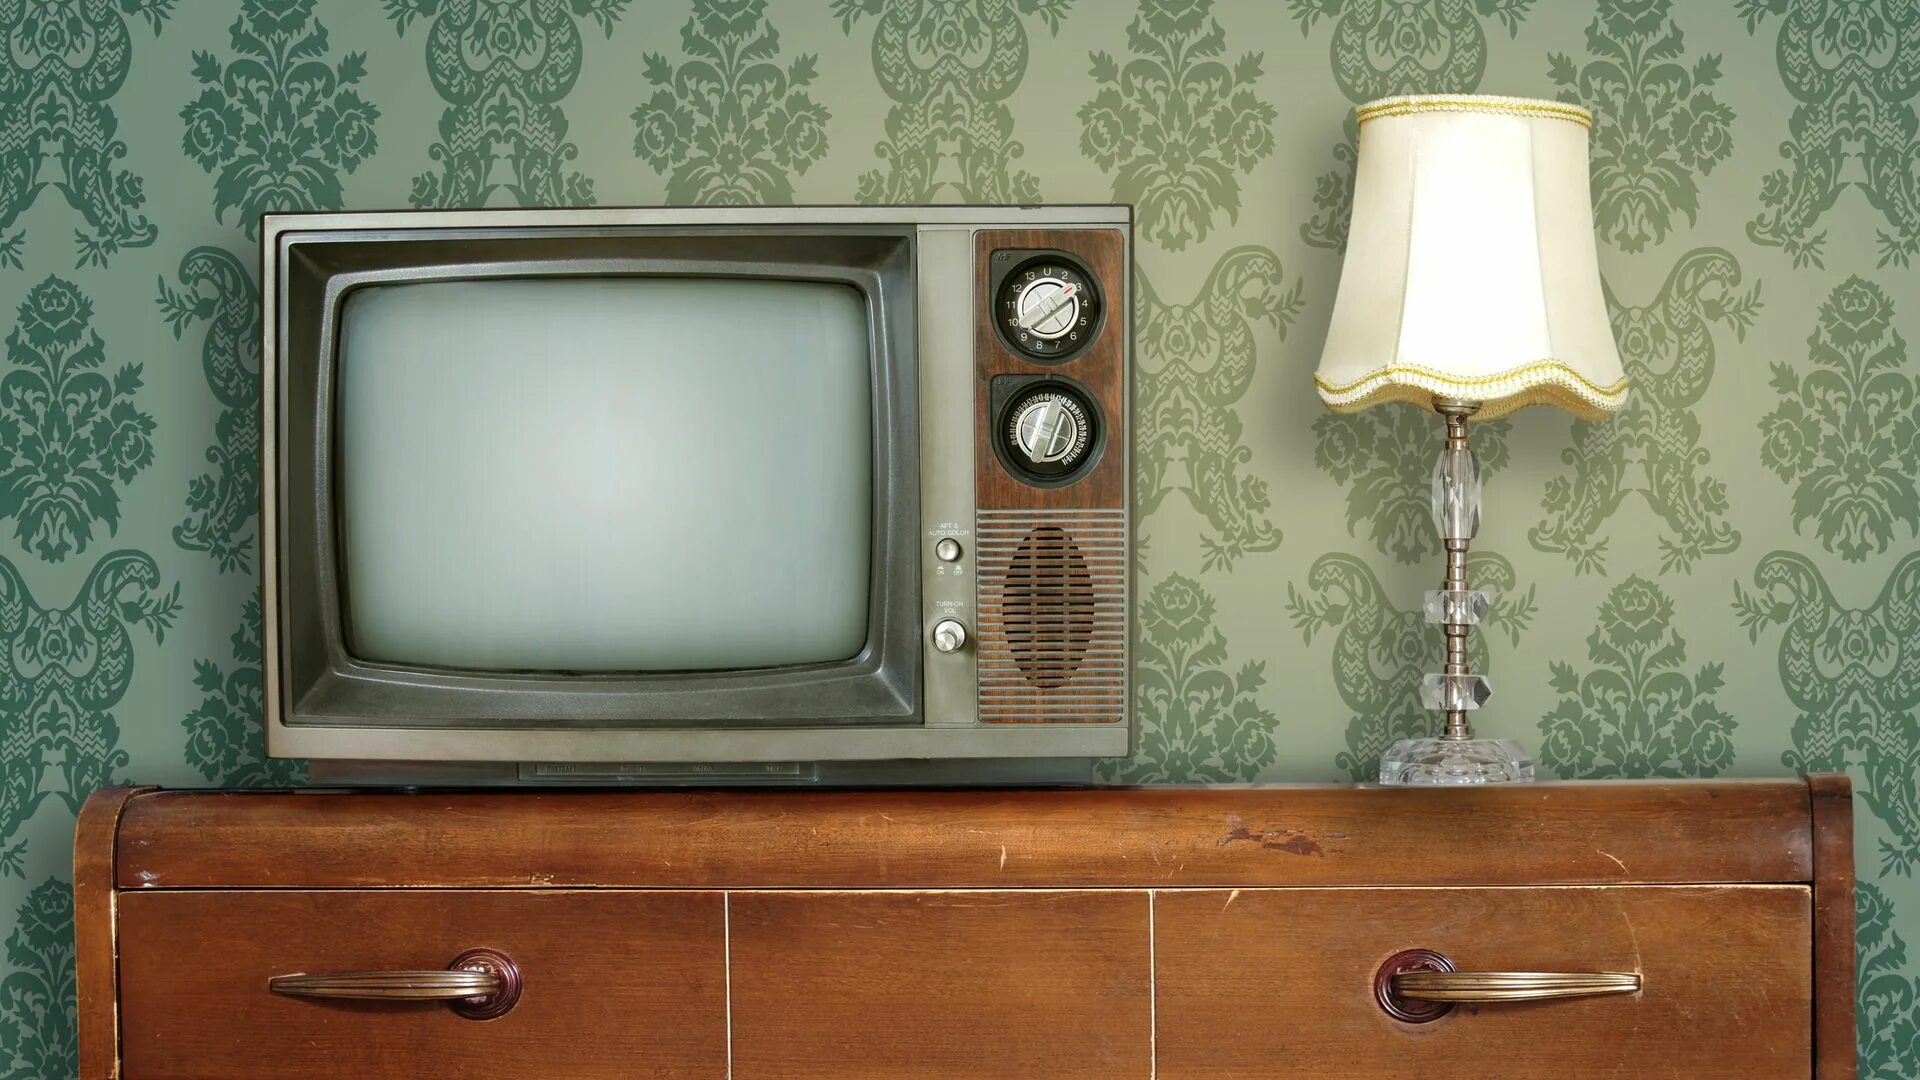 Старый телевизор. Старинный телевизор. Старый телевизор в интерьере. Ретро телевизор.